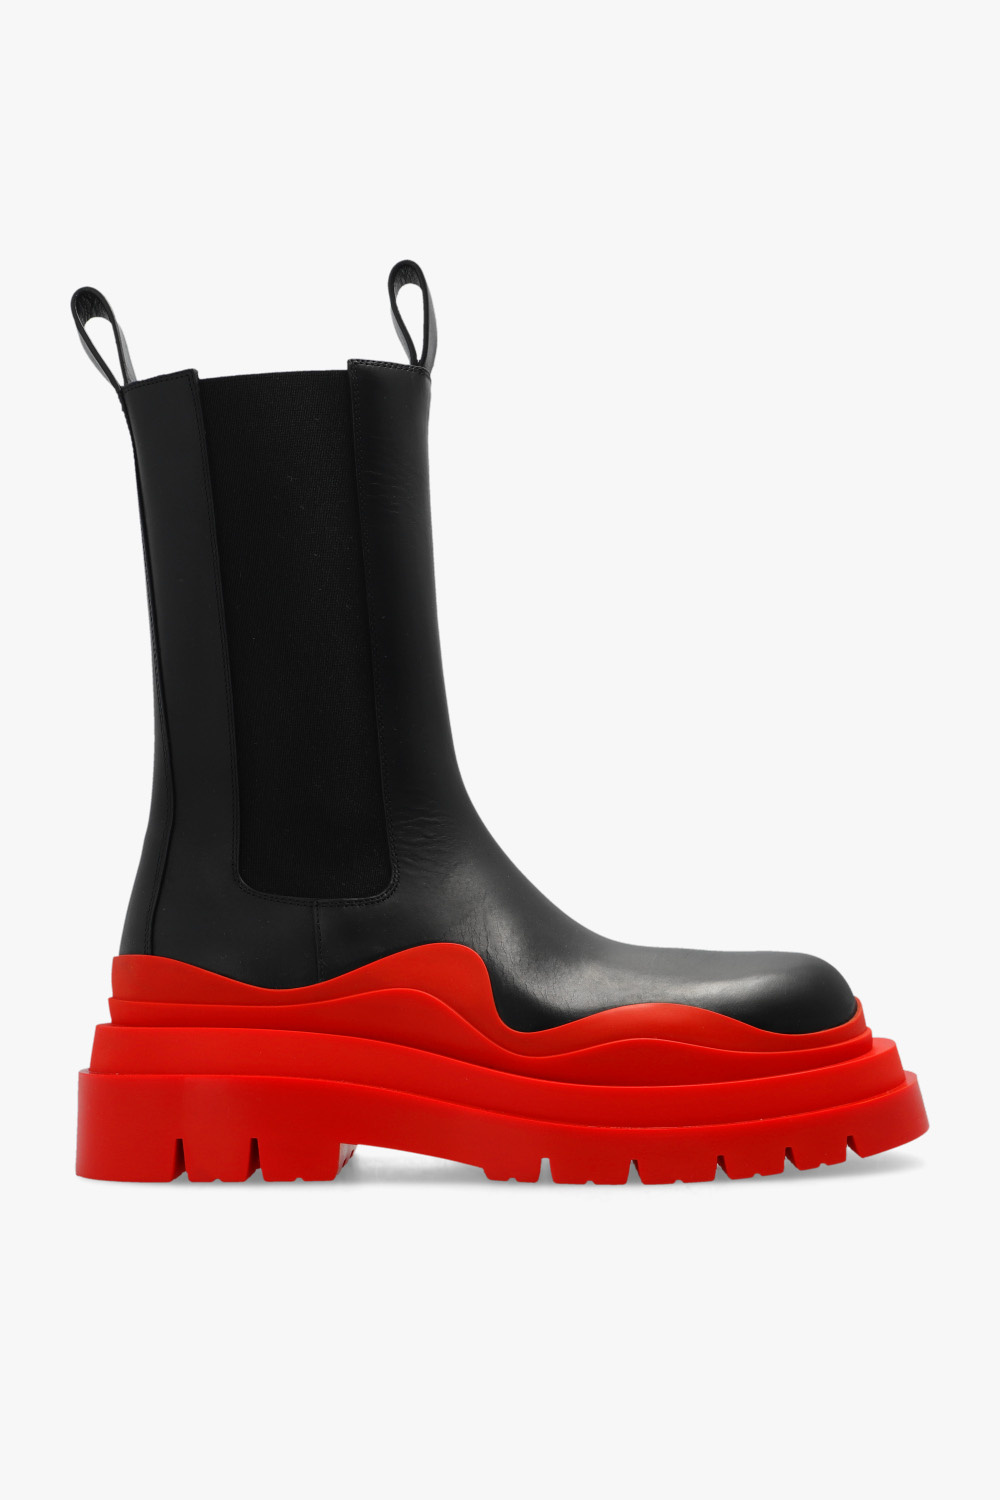 Bottega Veneta ‘Tire’ leather ankle boots